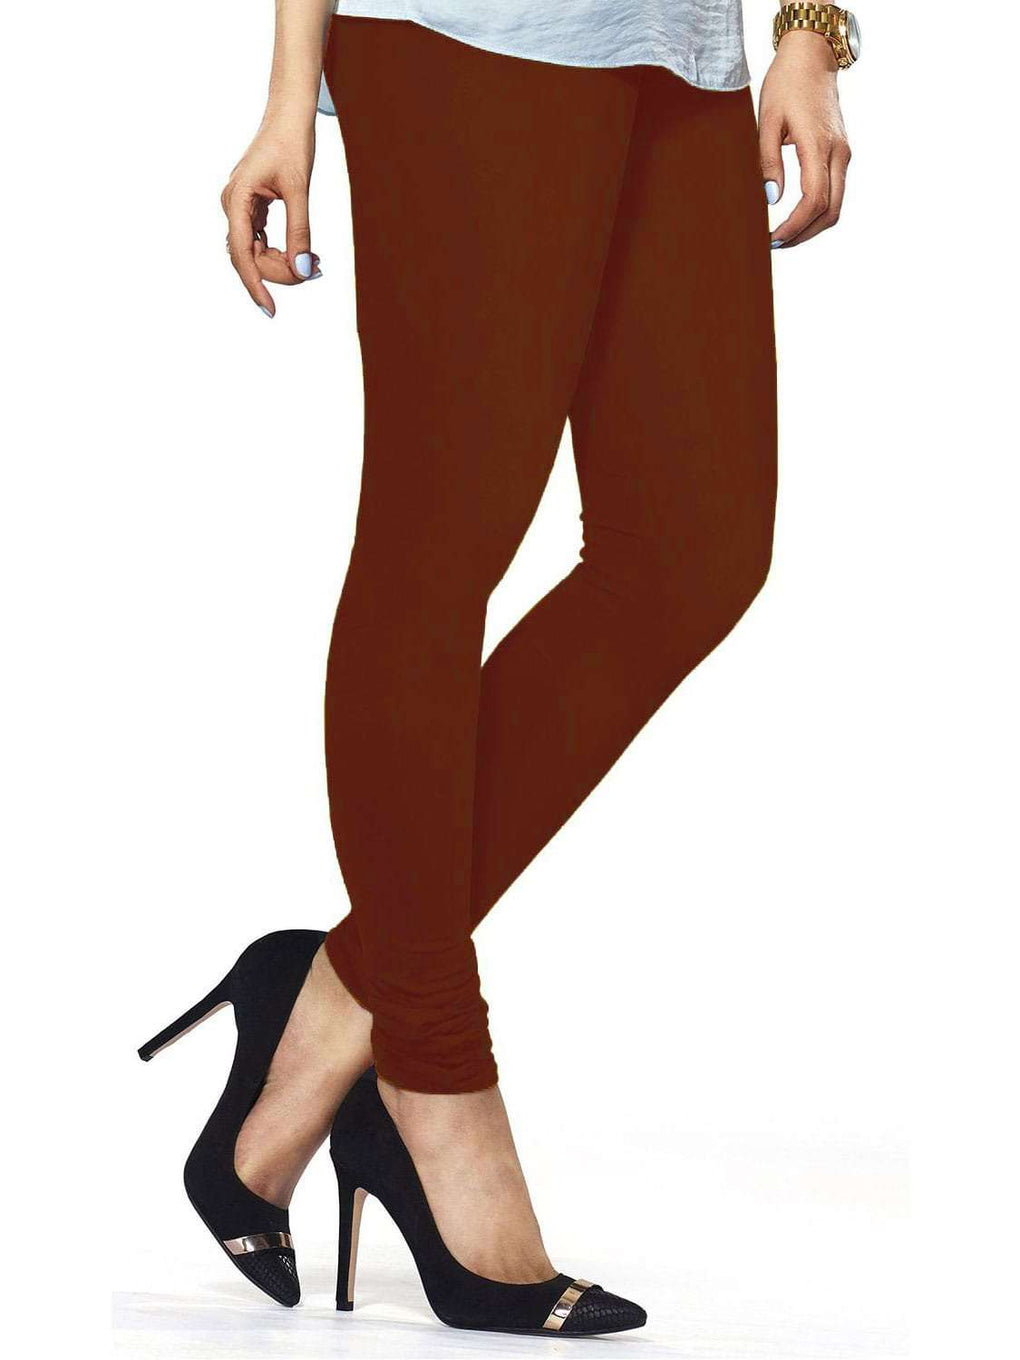 Buy Hajmeera Styles Women's Leggings (XL Size, 4 Way Leggin Pant) (Brown  Color) at Amazon.in